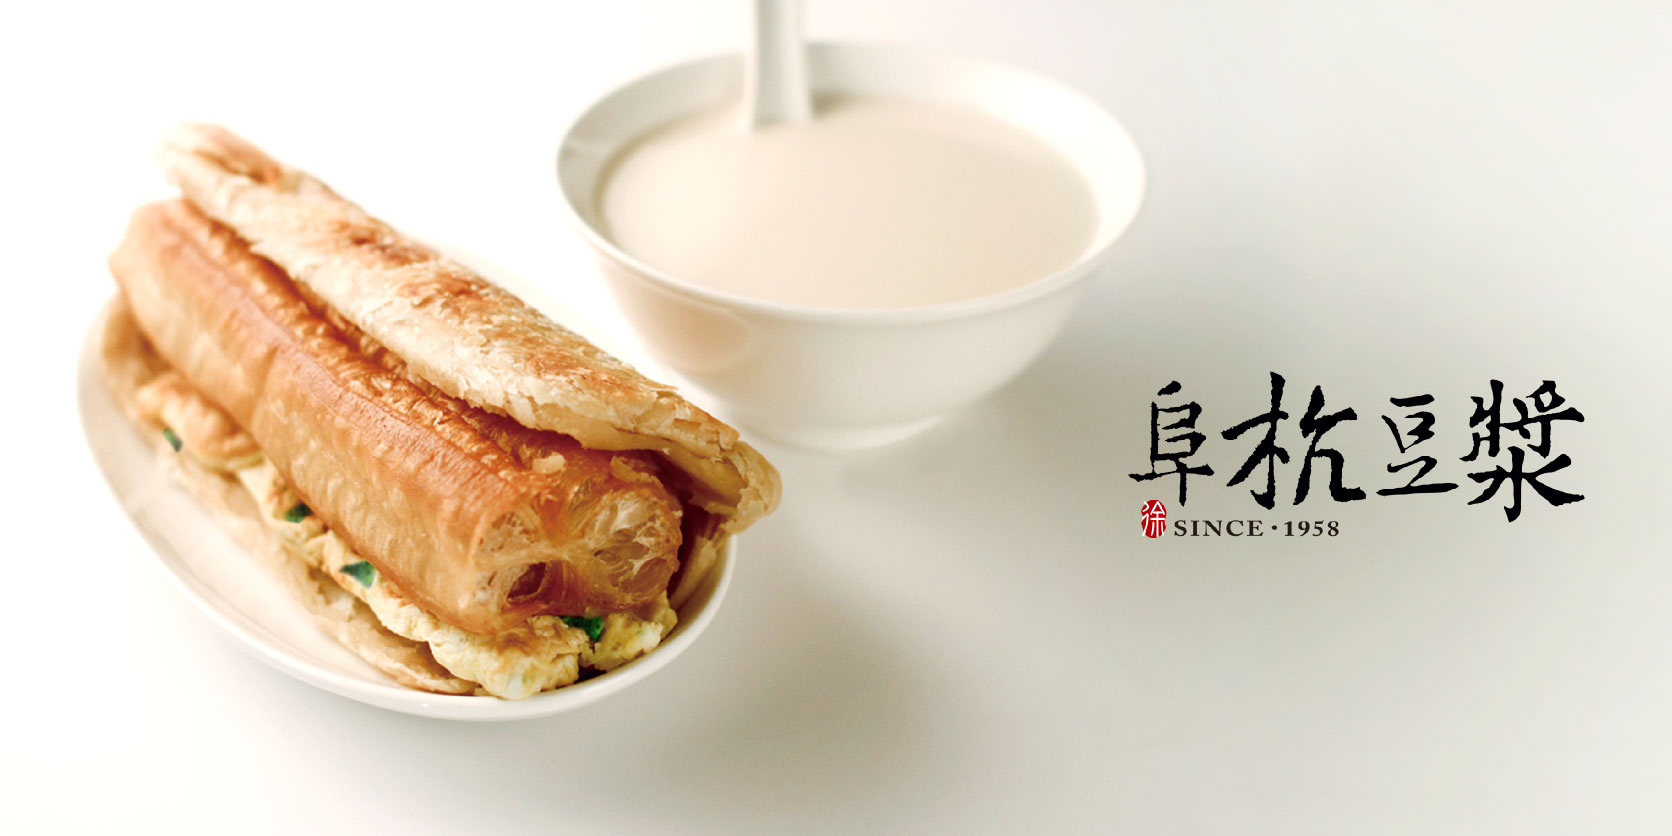 Fuhang Soy Milk rebranding